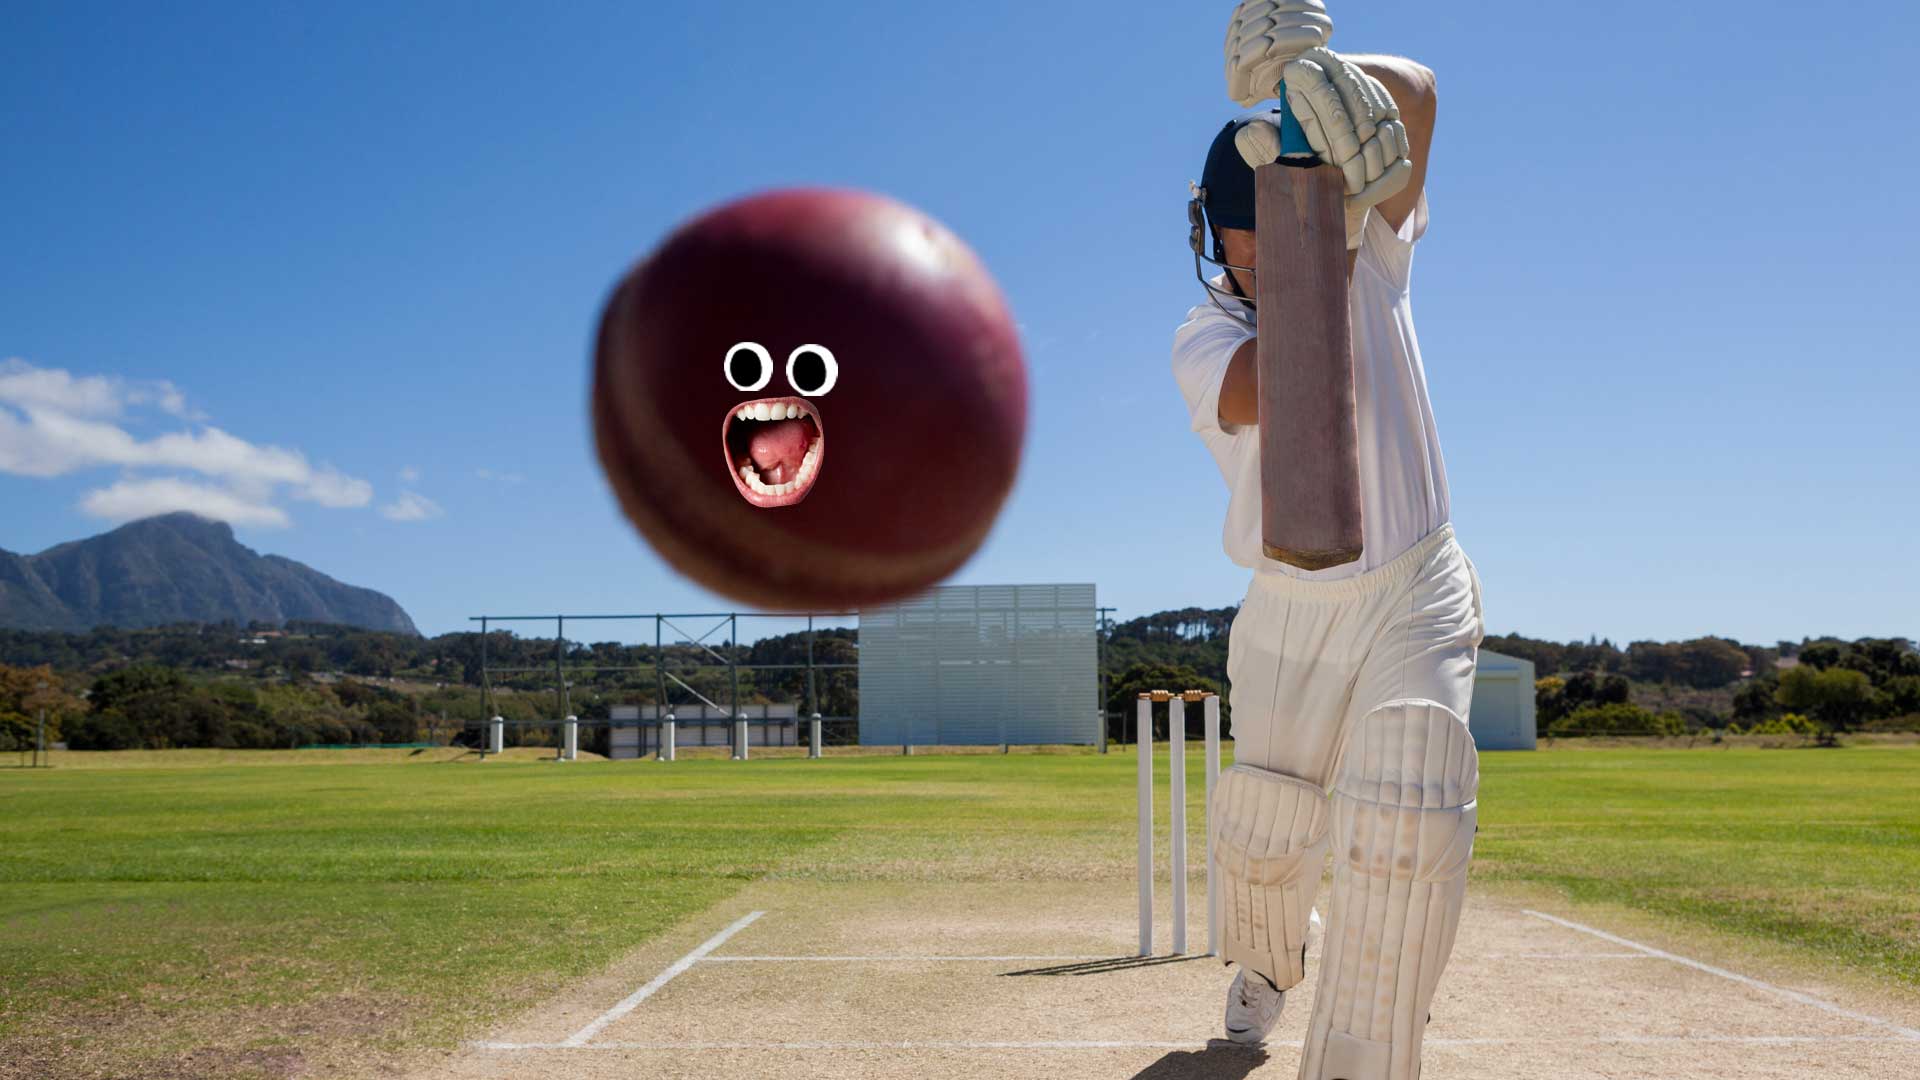 A cricket player hitting a ball